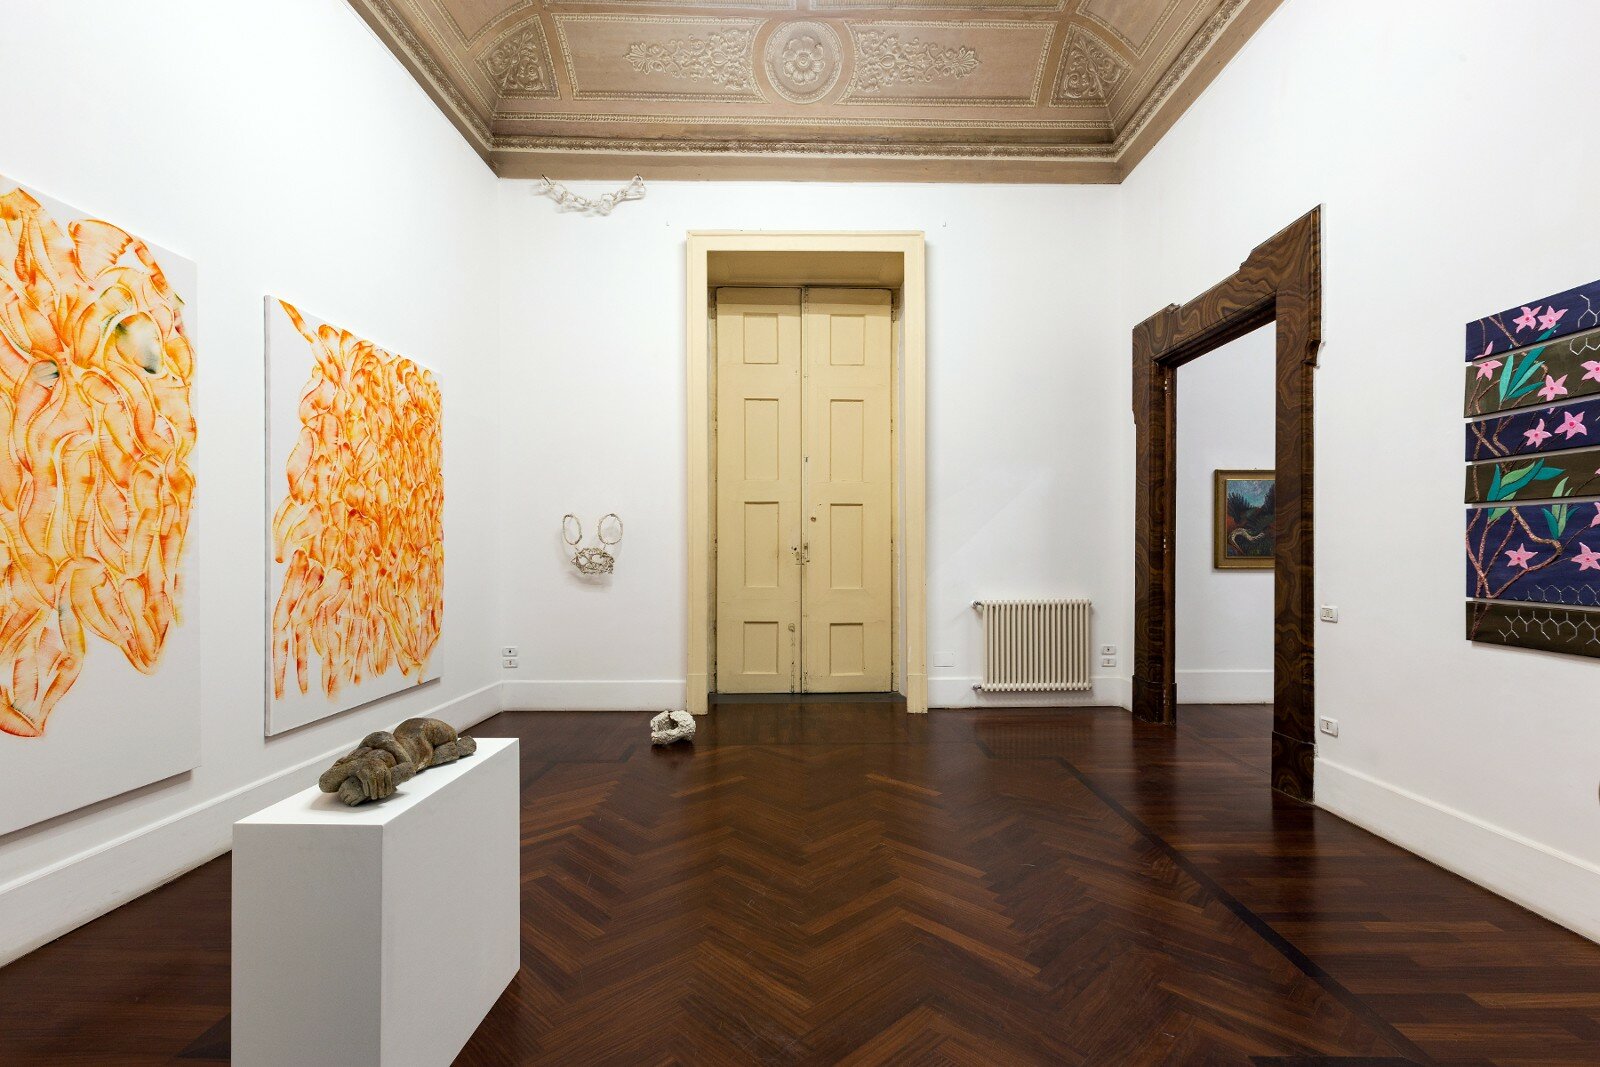 PARABASIS, Galleria Tiziana Di Caro, Naples, 2020